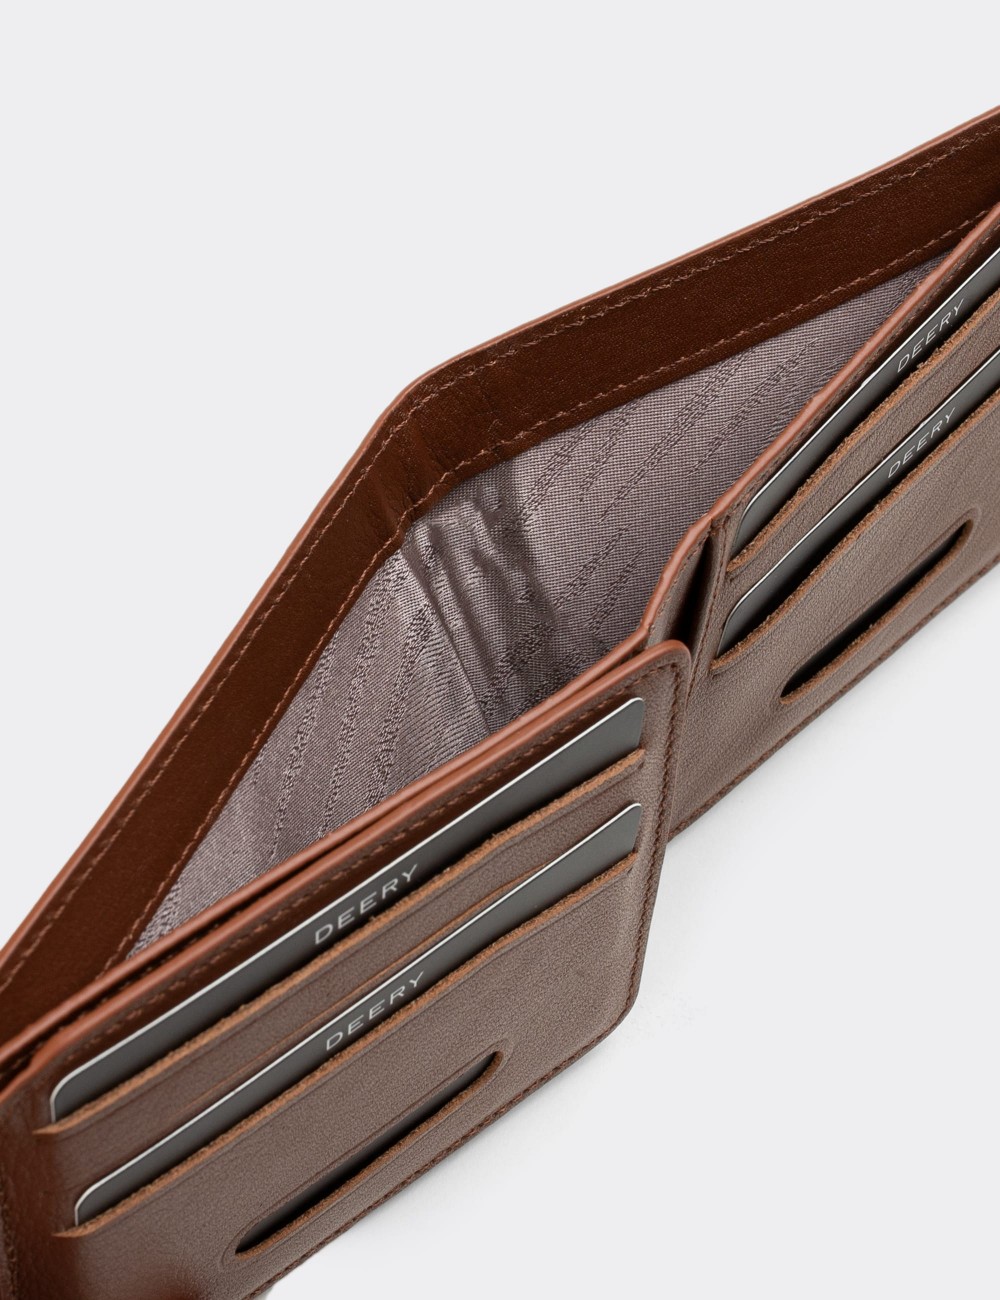  Leather Tan Men's Wallet - 0390AMTBAZ01